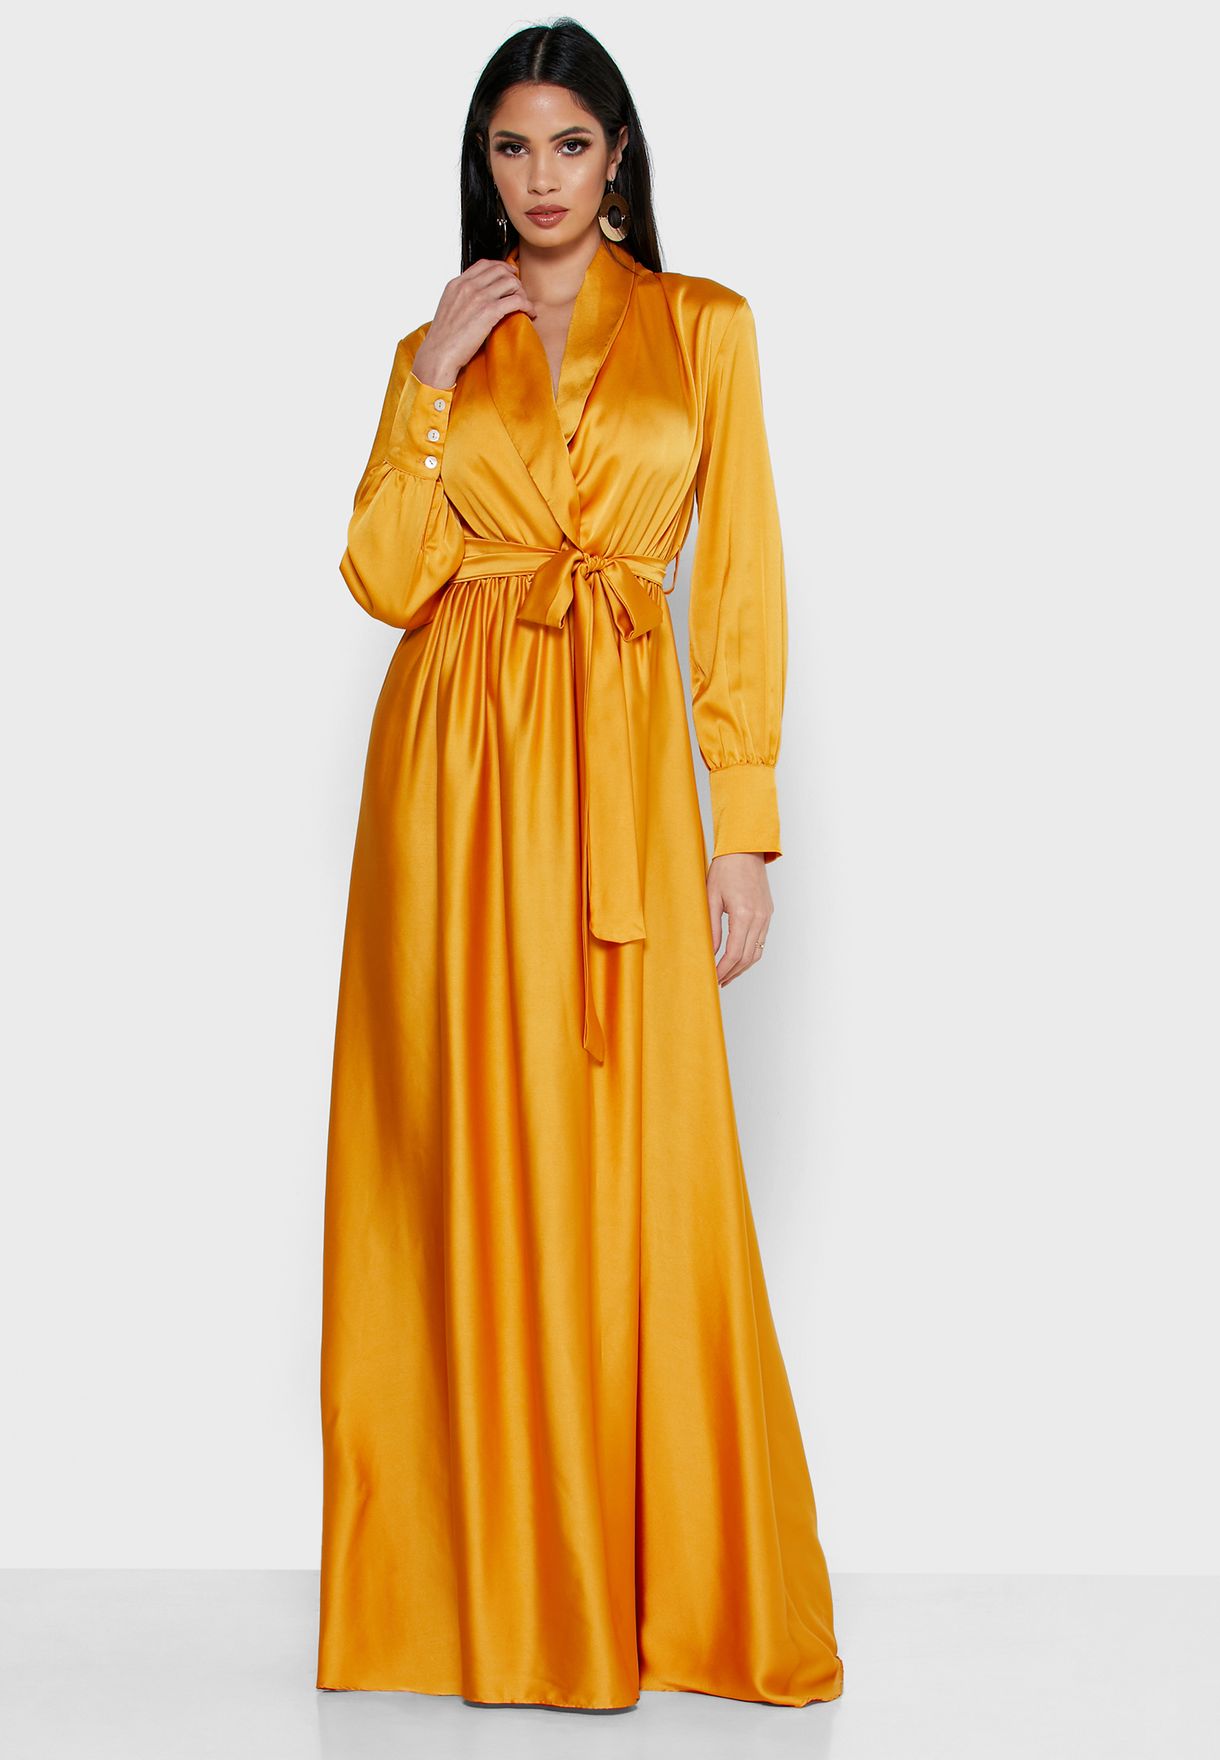 Satin Yellow Maxi Dress Top Sellers, UP ...